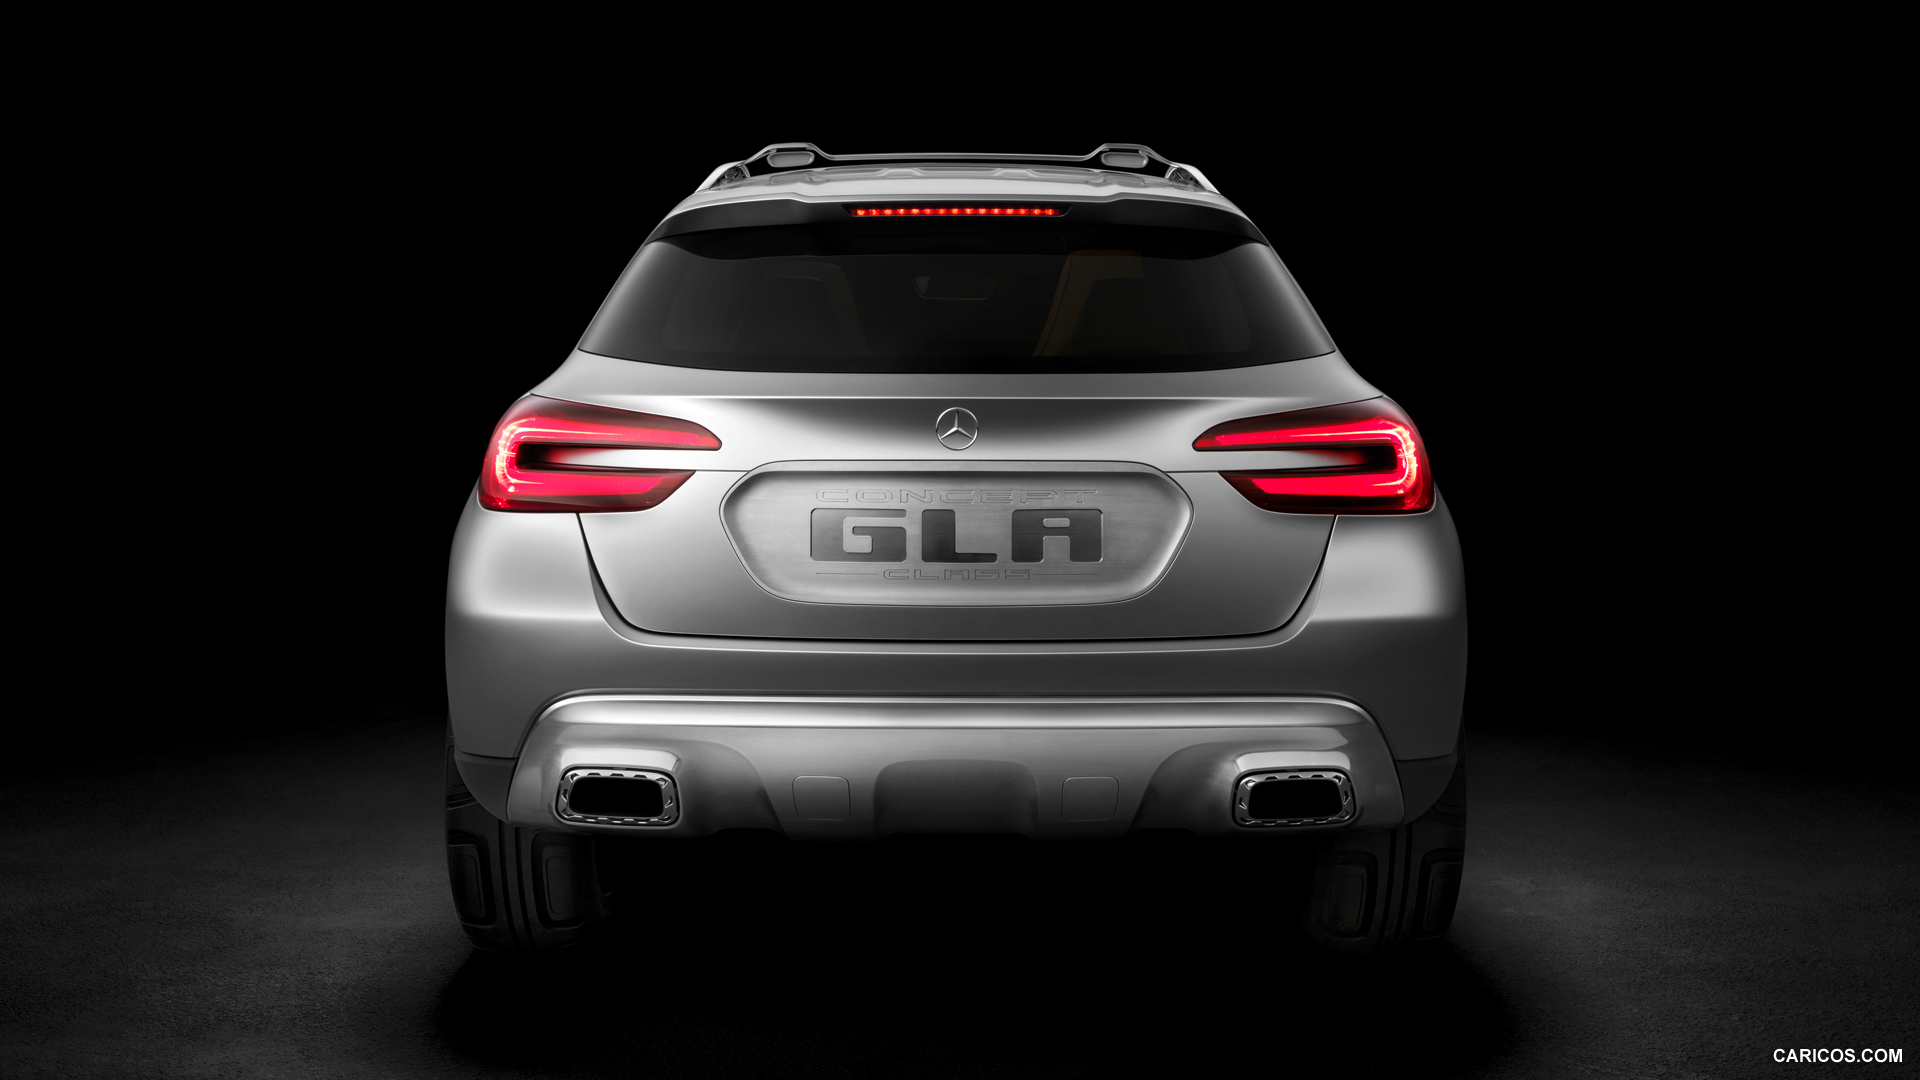 2013 Mercedes-Benz GLA Concept  - Rear, #33 of 42